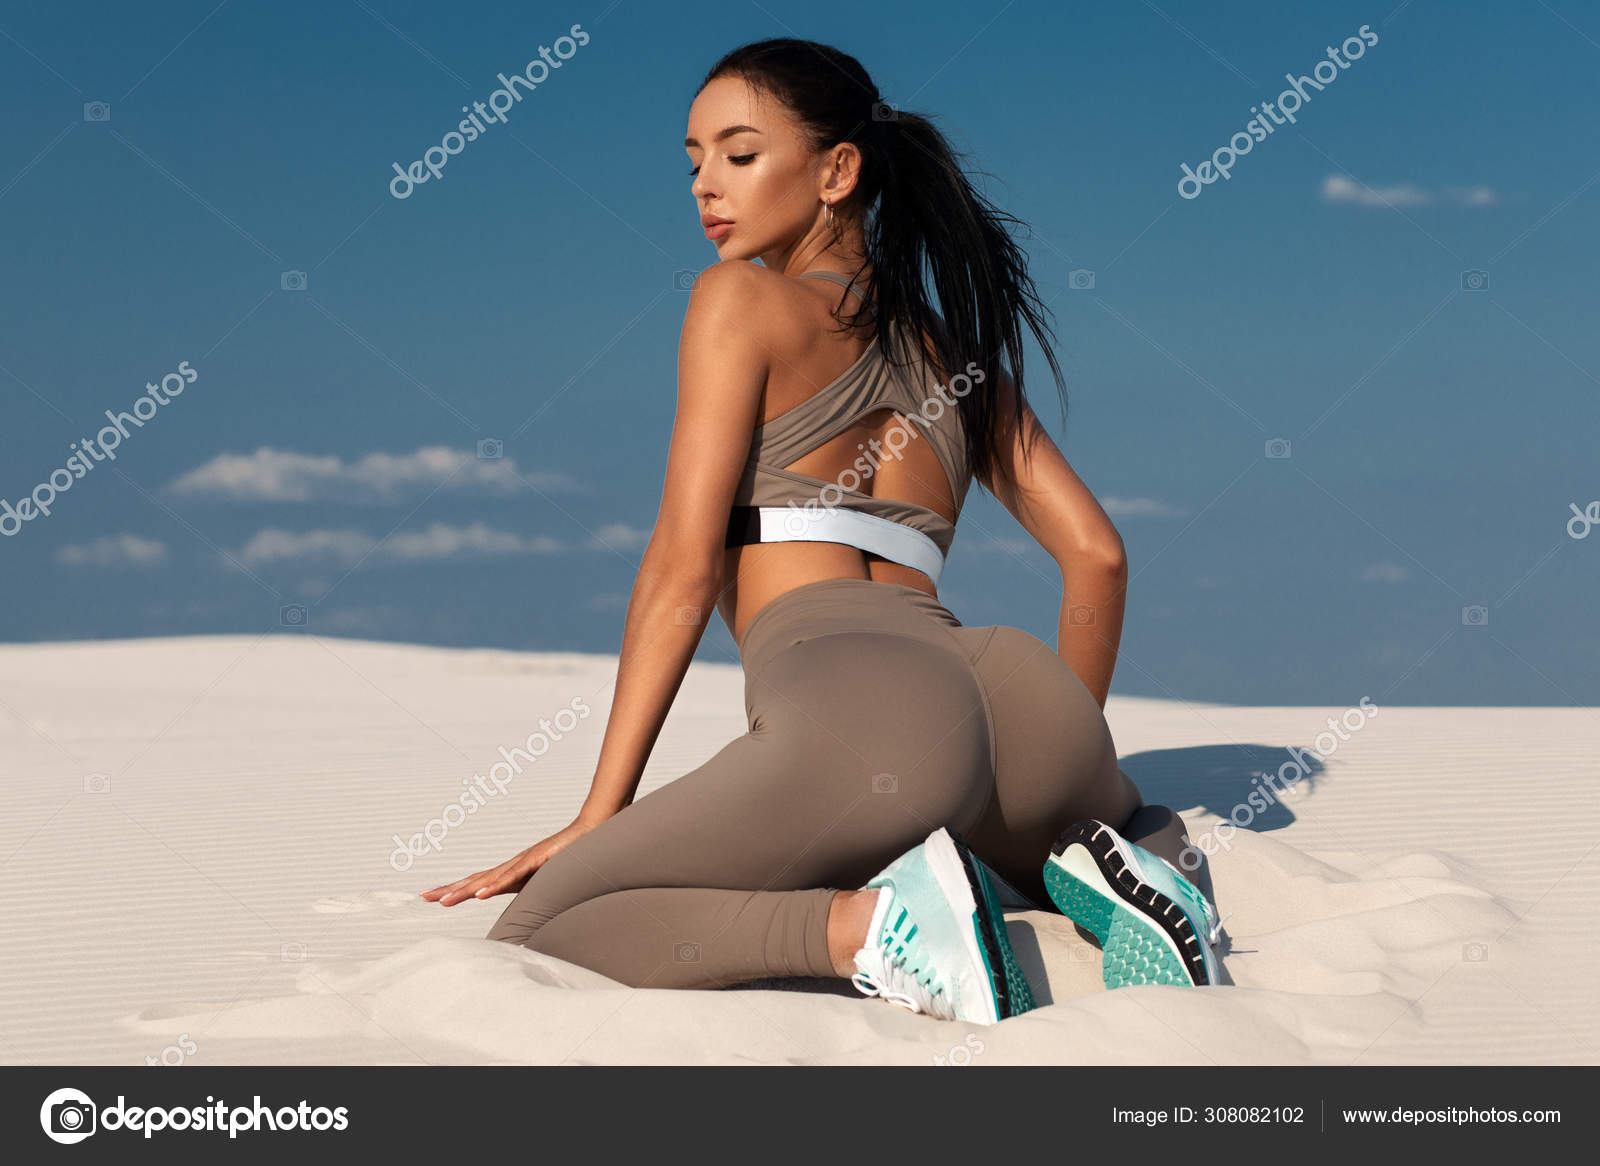 https://st4.depositphotos.com/3383955/30808/i/1600/depositphotos_308082102-stock-photo-beautiful-athletic-girl-sportswear-sexy.jpg